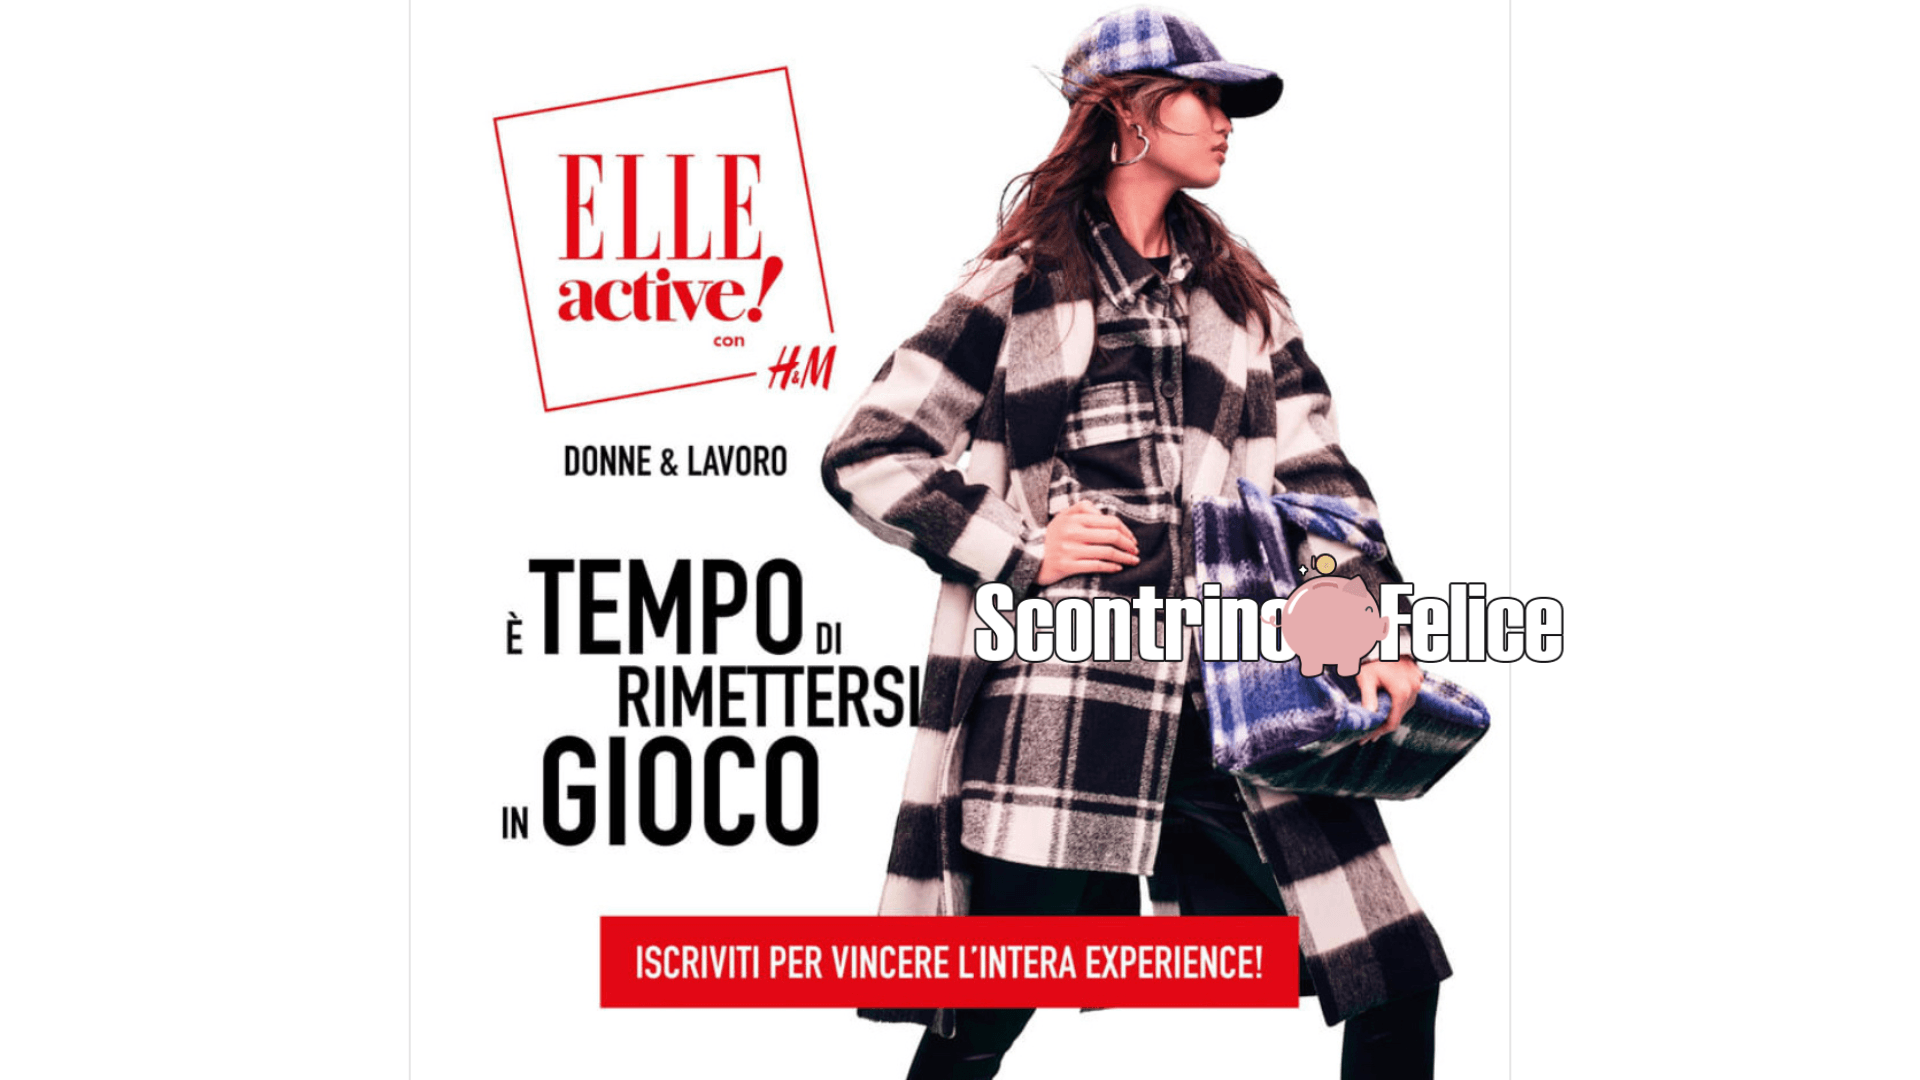 Vinci un weekend per 2 persone a Milano per partecipare a Elle active 3